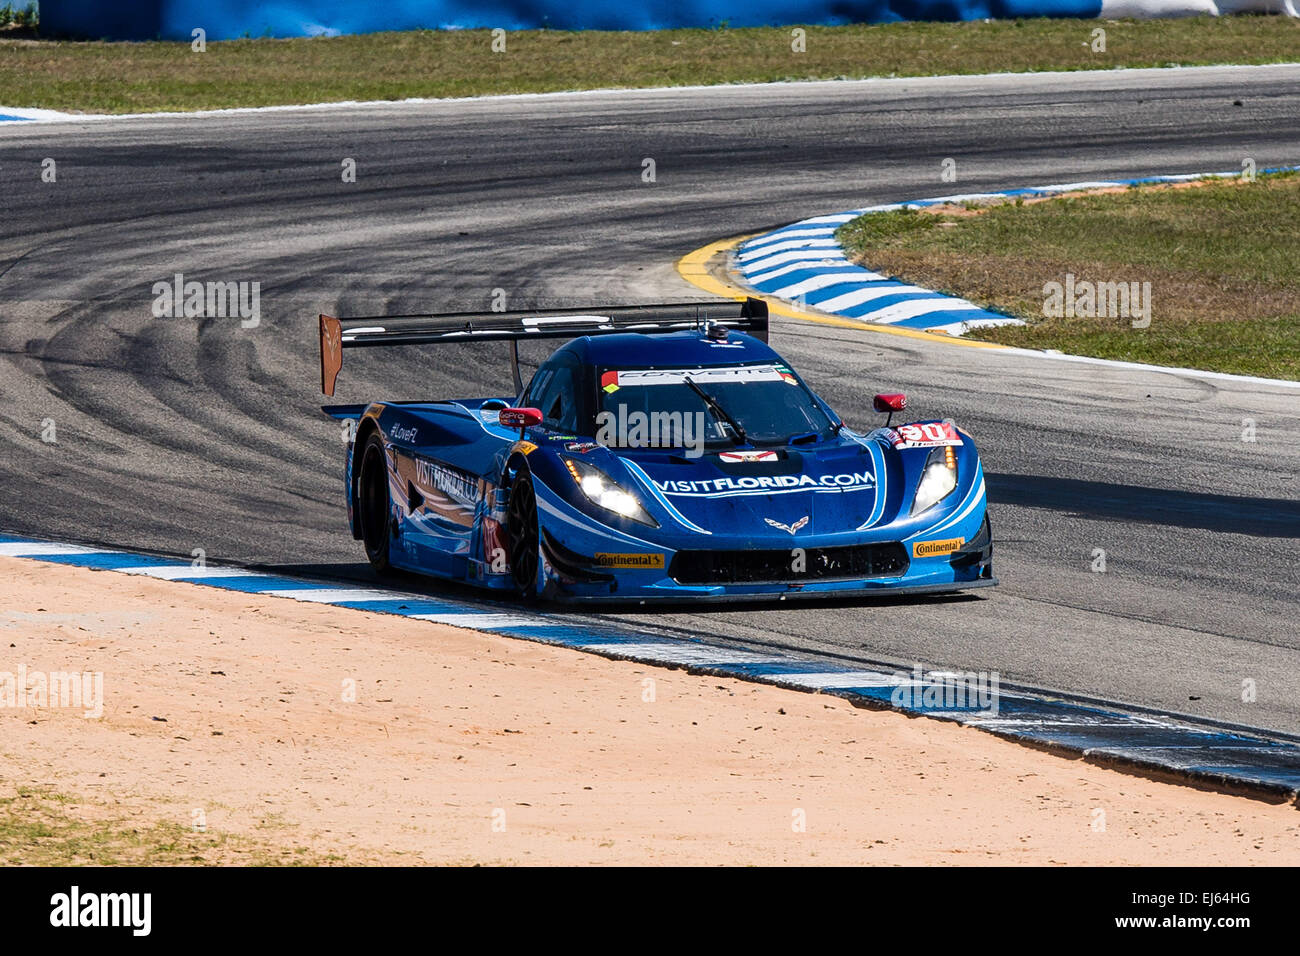 21.03.2015 - Sebring, FL, USA - Ecke 5 auf dem Sebring International Raceway in Sebring FL. DelMecum/Cal-Sport-Medien Stockfoto